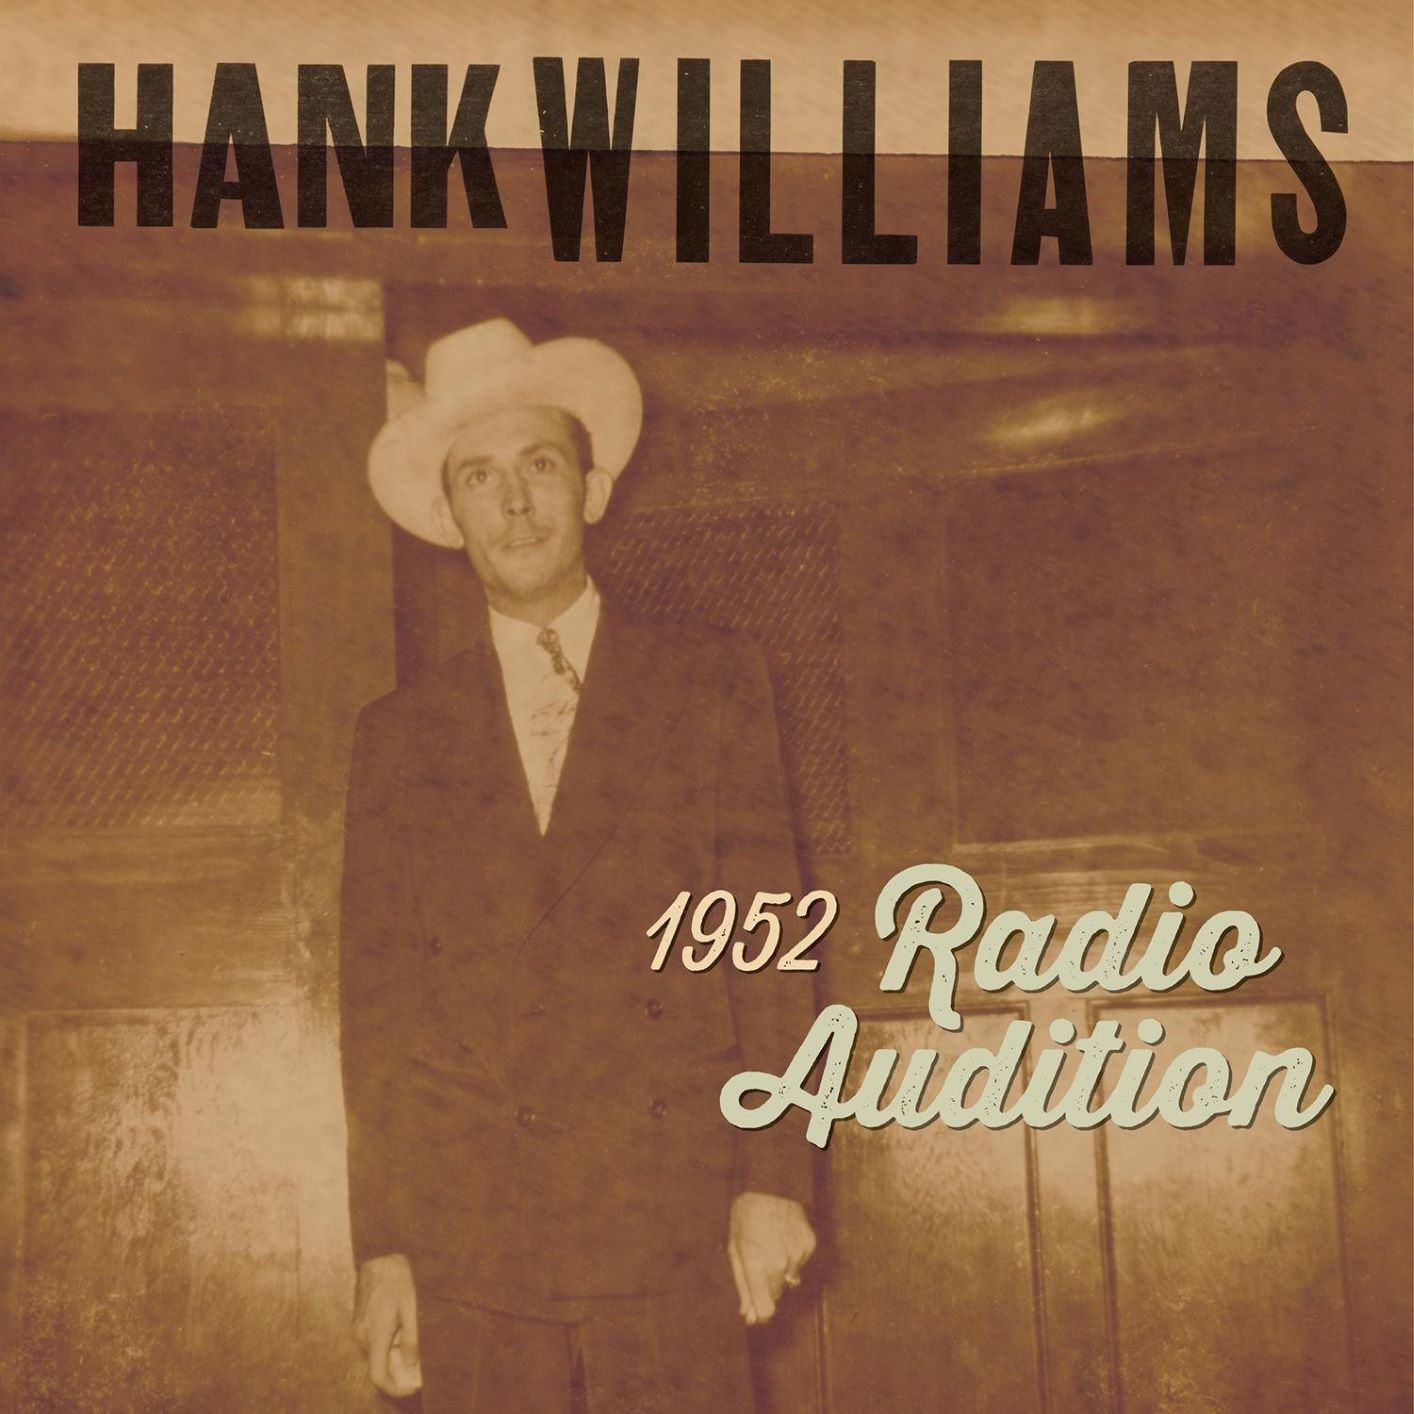 HANK WILLIAMS - 1952 Radio Show Auditions - 7" - Limited Red Vinyl [BF2020-NOV27]